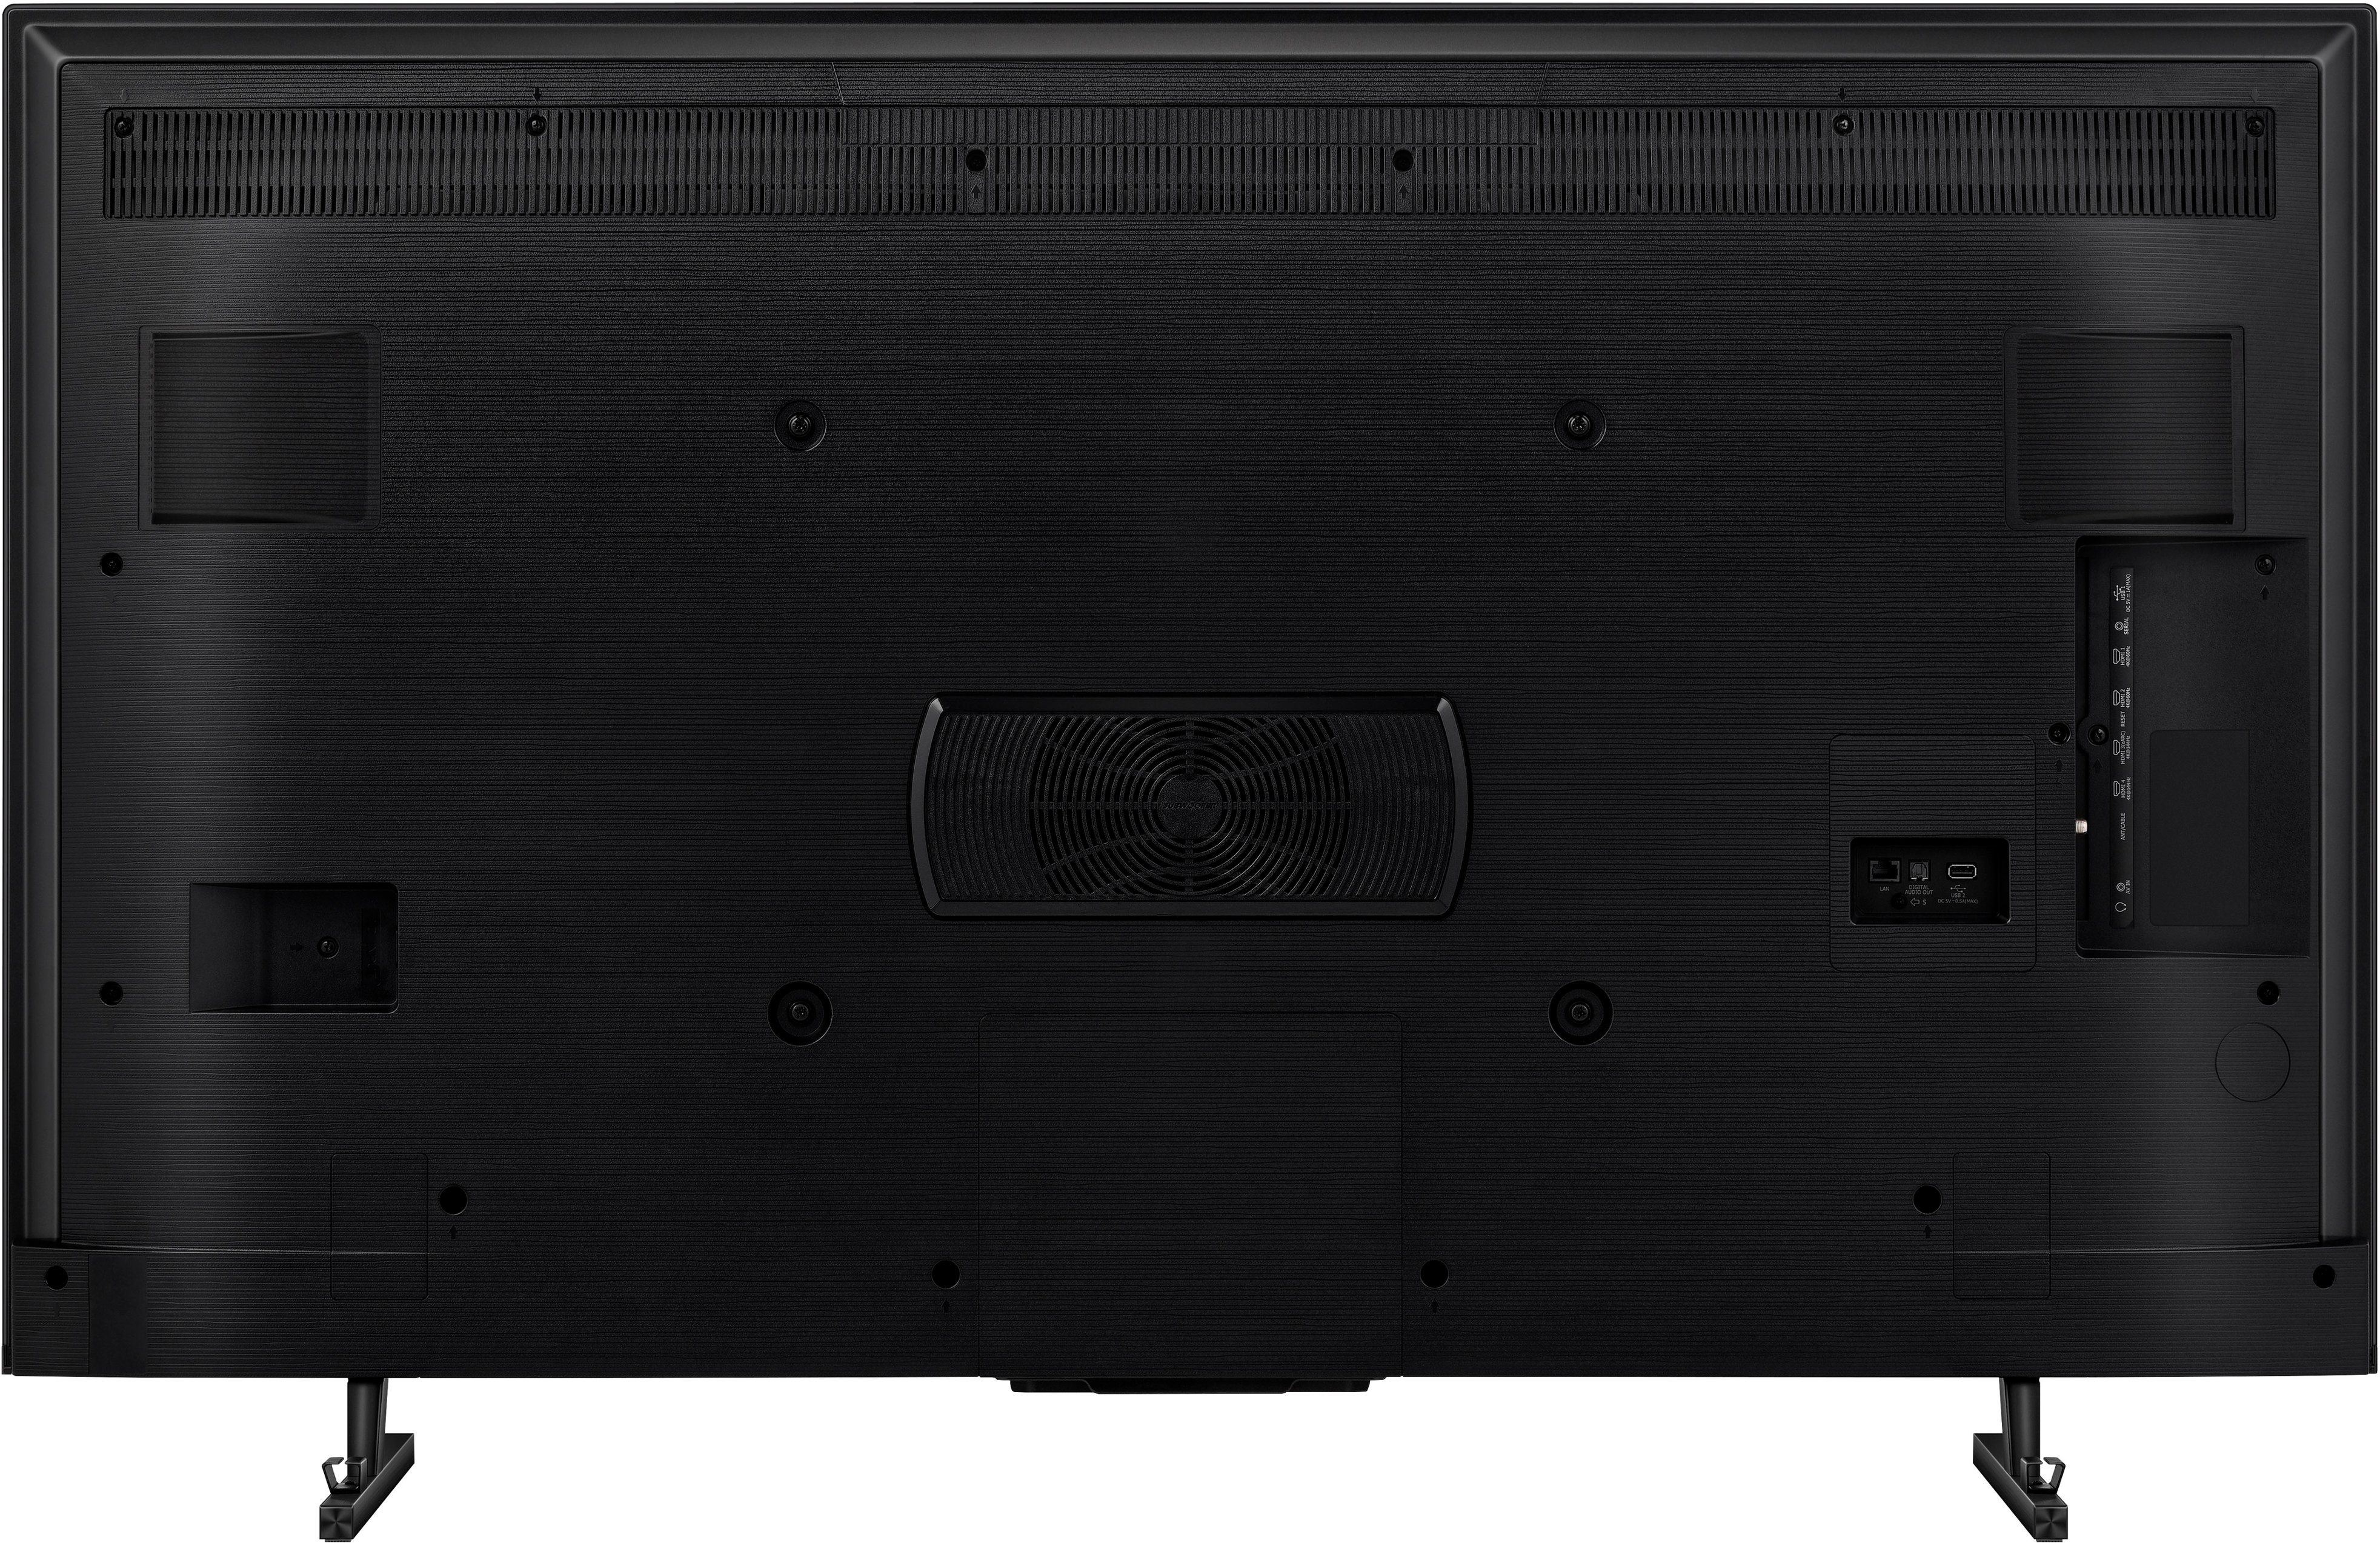 Hisense 55-Inch Class U8 Series Mini-LED ULED 4K UHD Google Smart TV  (55U8K) - QLED, Native 144Hz, 1500-Nit, Dolby Vision IQ, Full Array Local  Dimming, Game Mode Pro, Alexa Compatibility